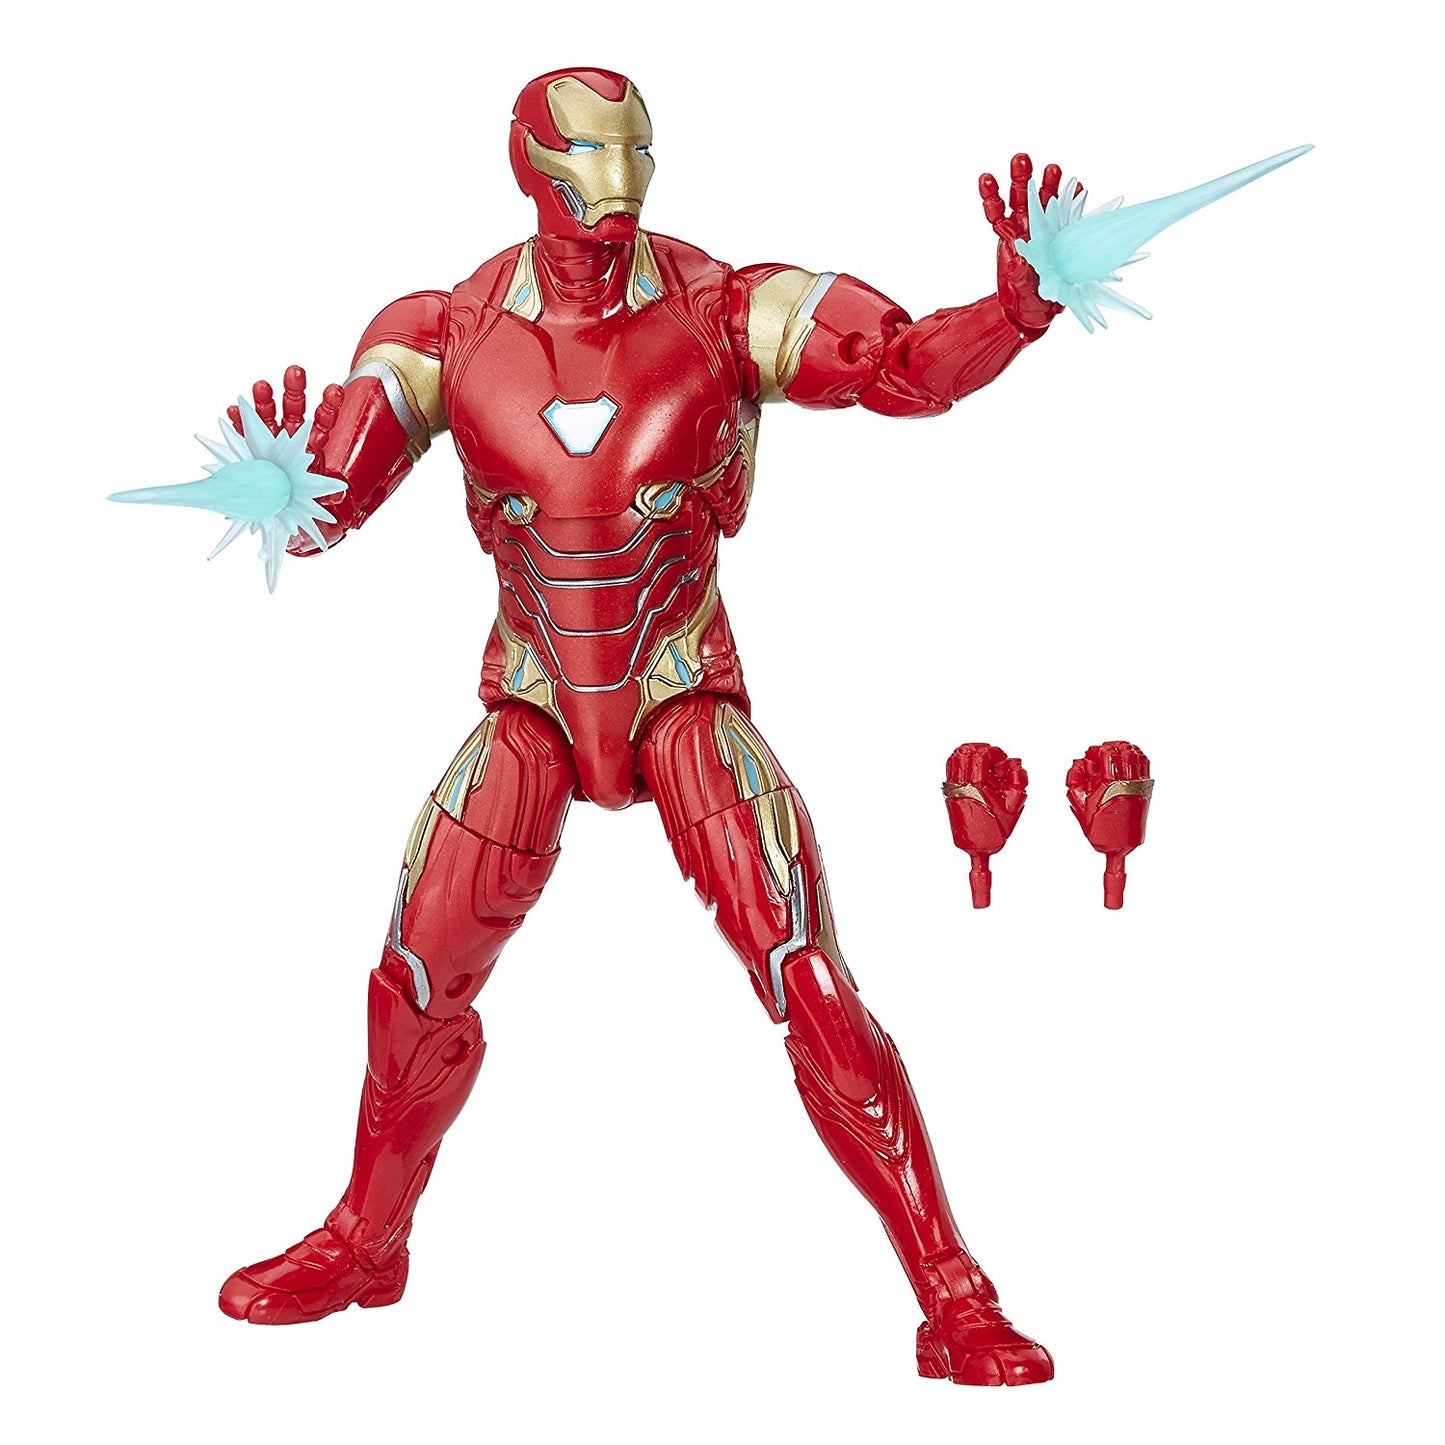 Marvel Legends Avengers Infinity War Iron Man Action Figure